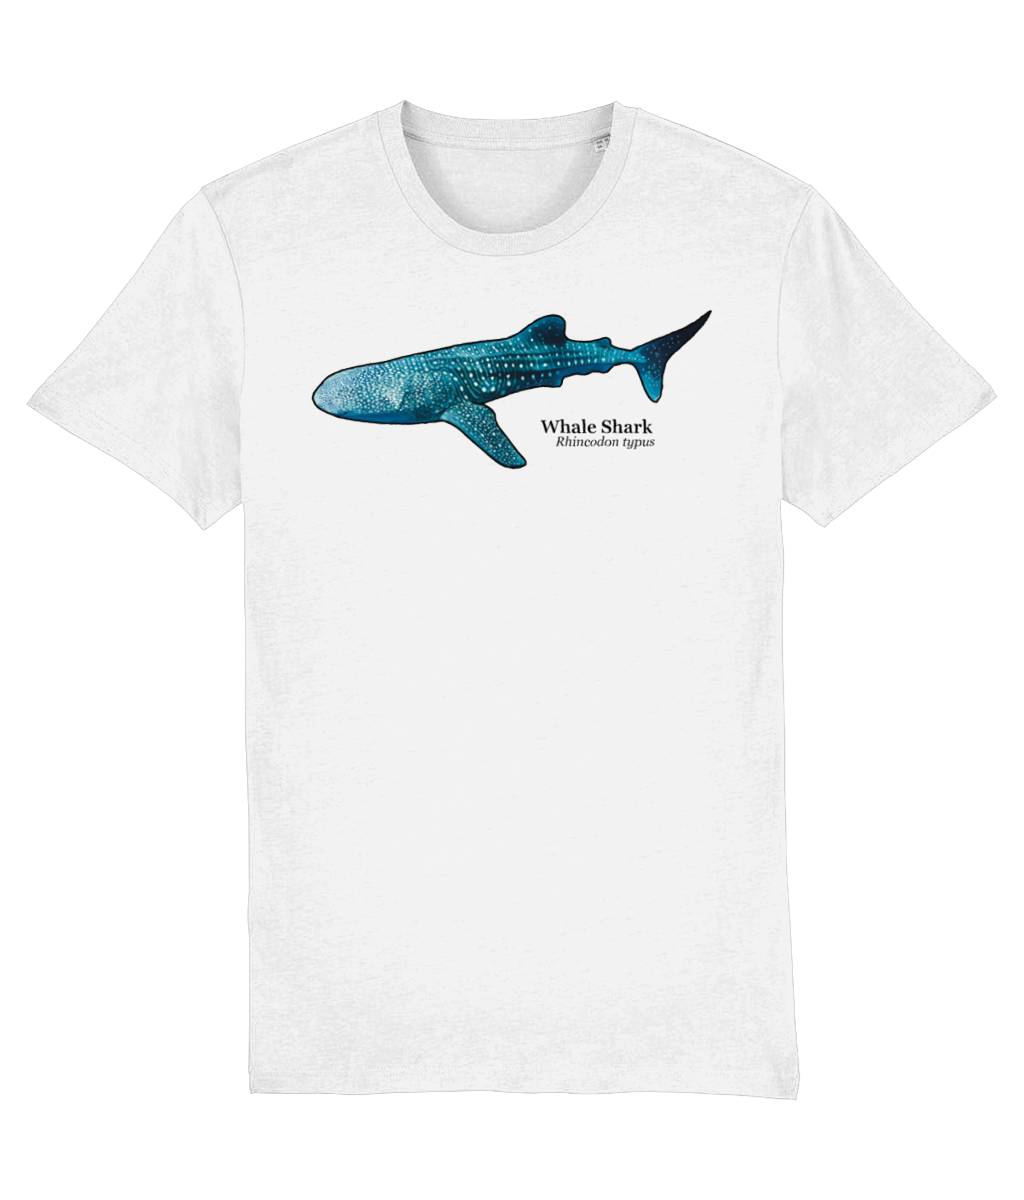 Whale Shark Charity T-Shirt